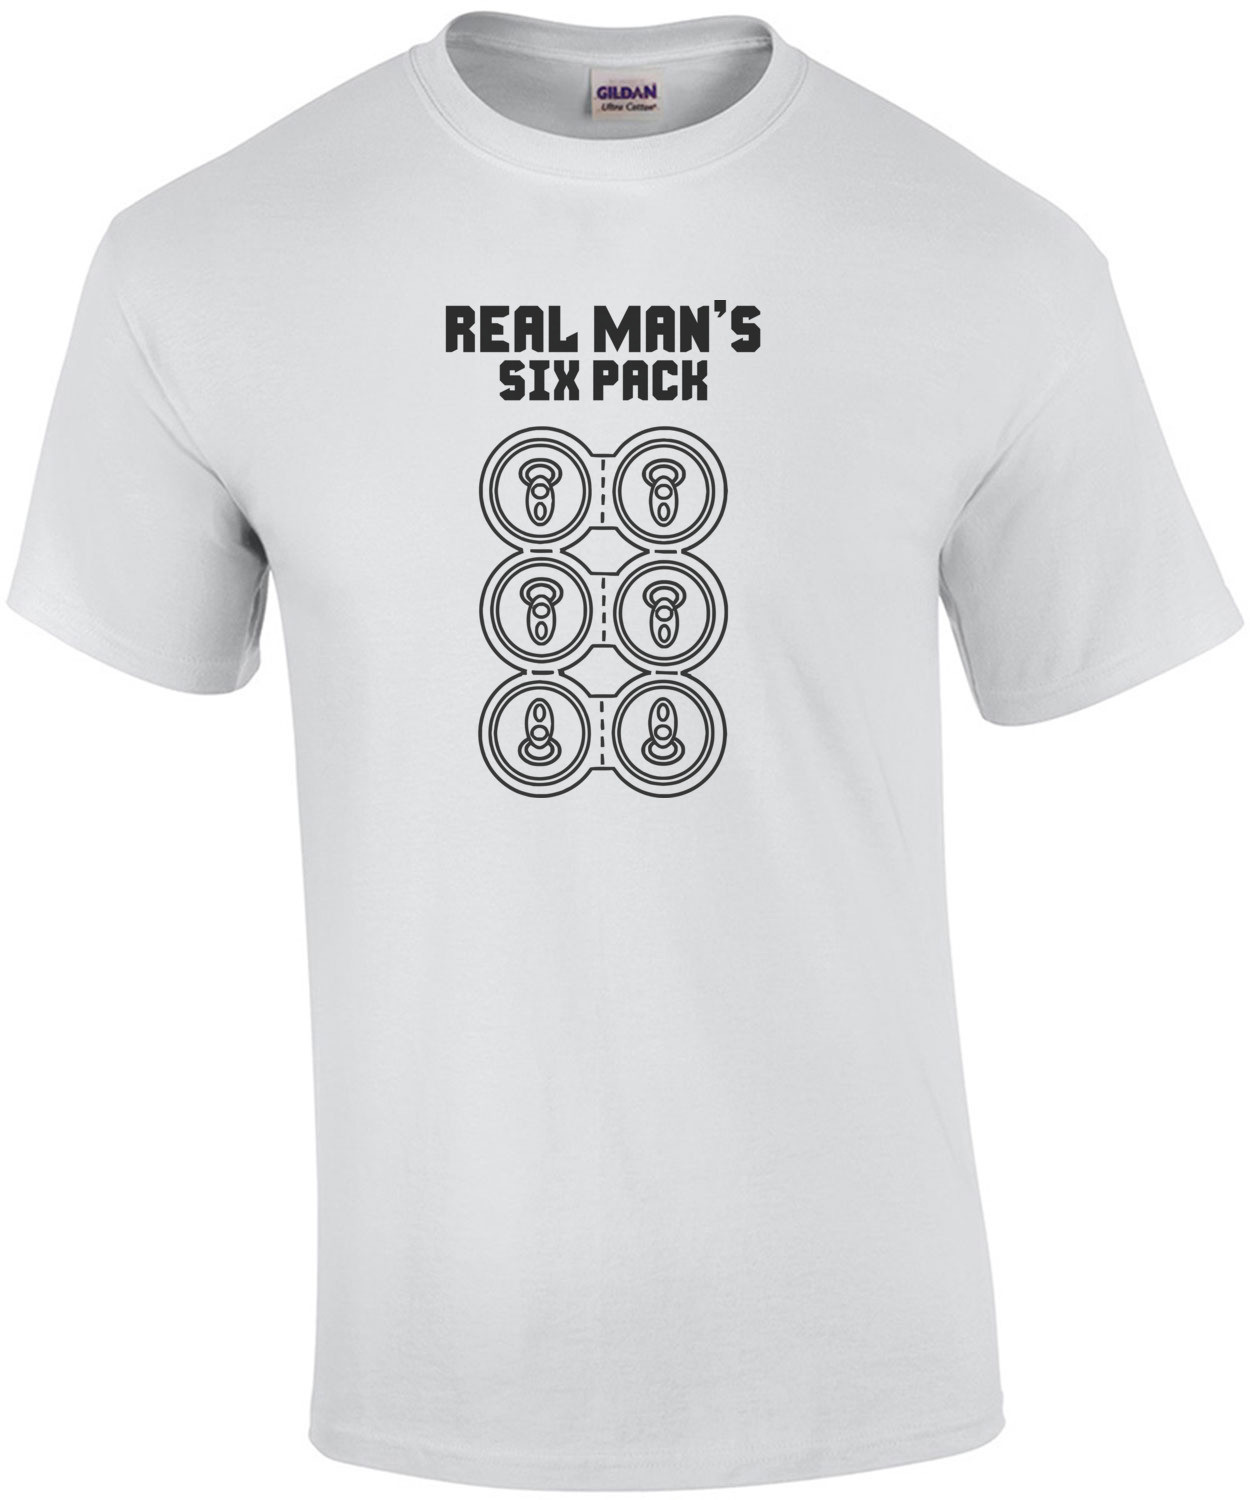 Real Man's Six Pack Shirt